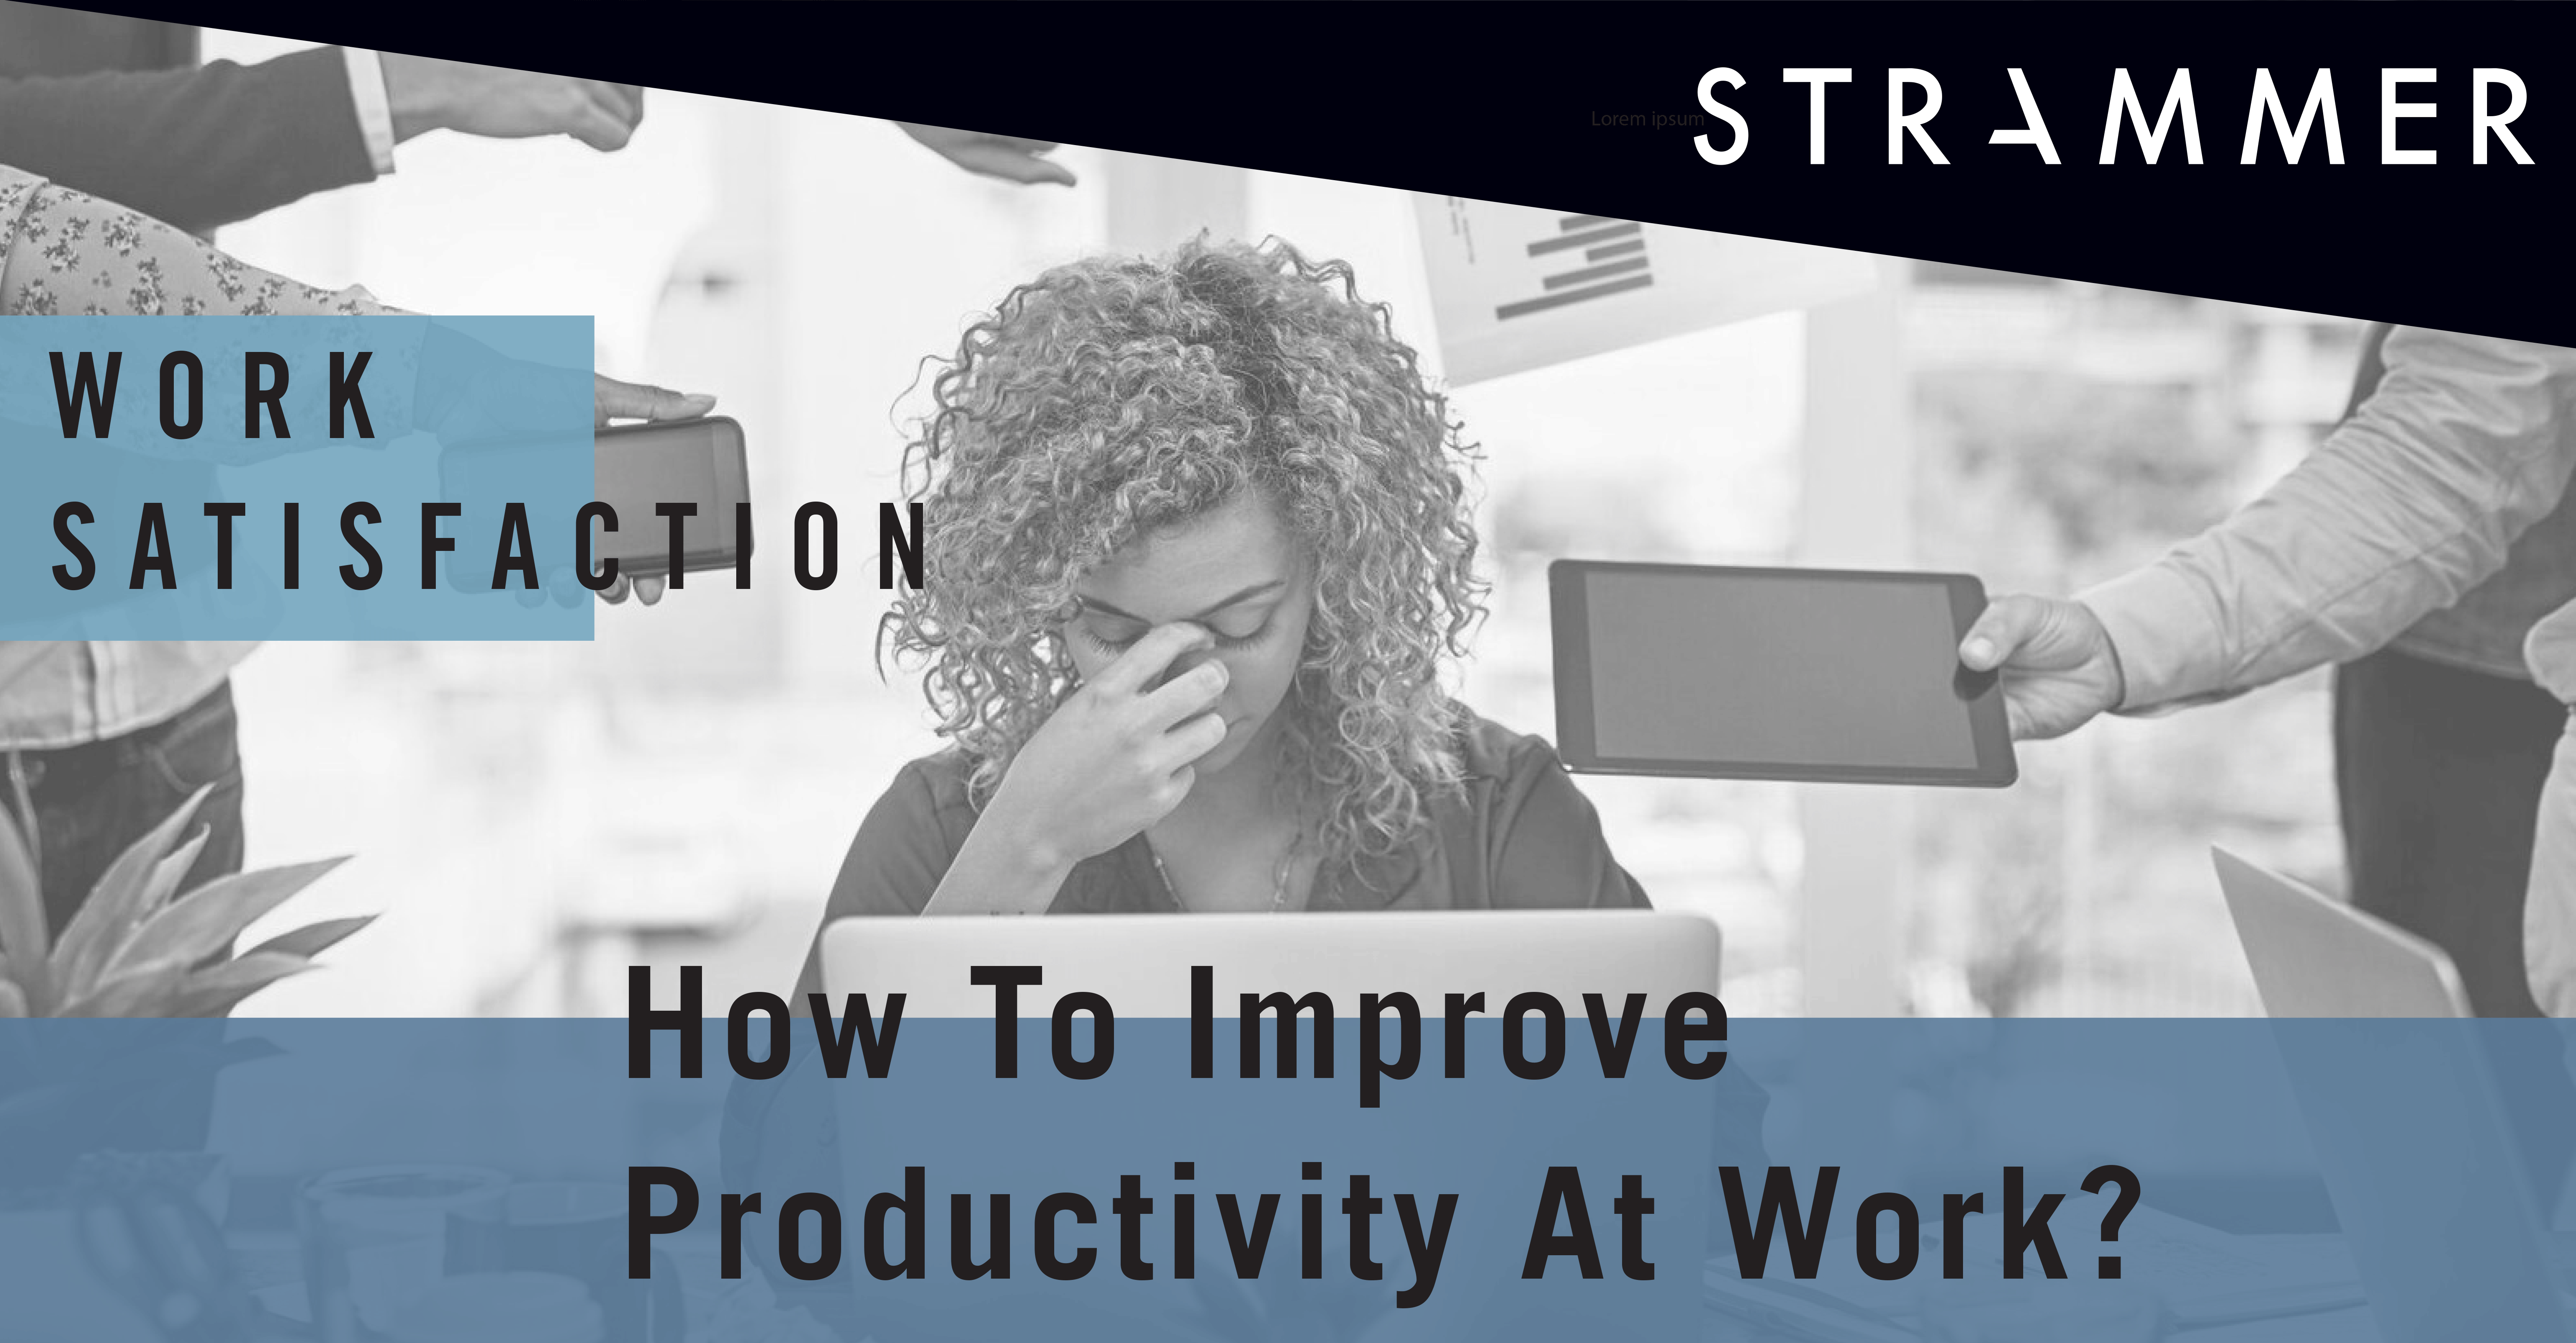 Workforce productivity